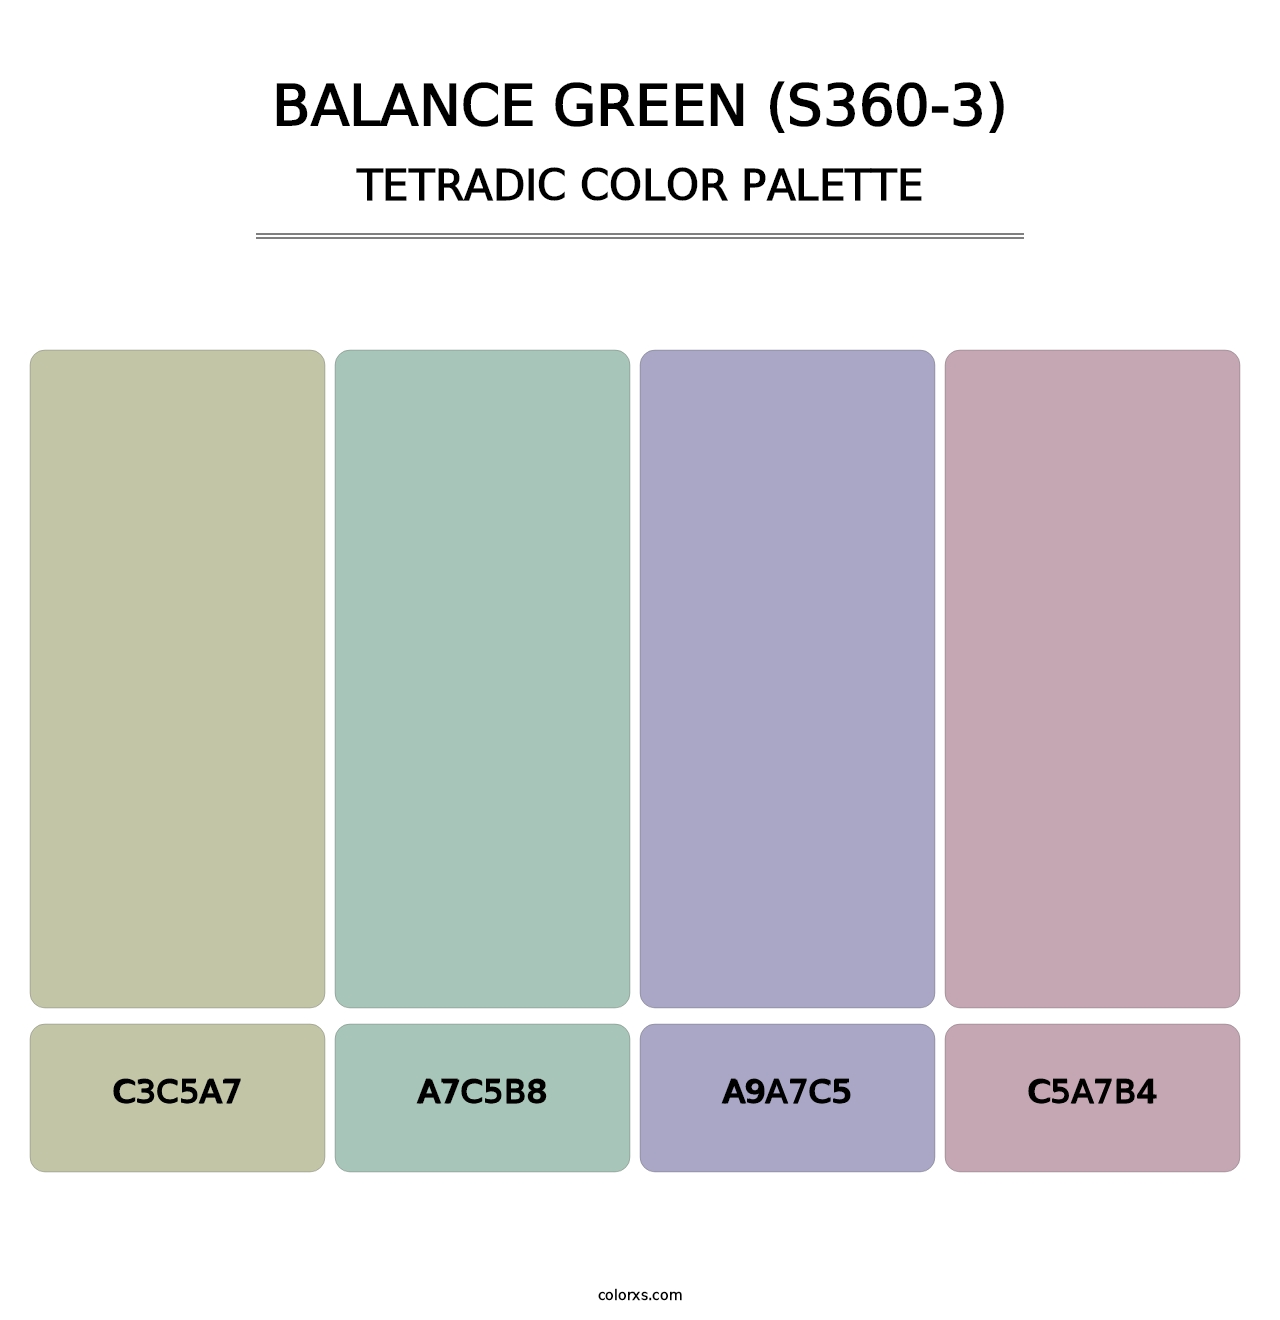 Balance Green (S360-3) - Tetradic Color Palette